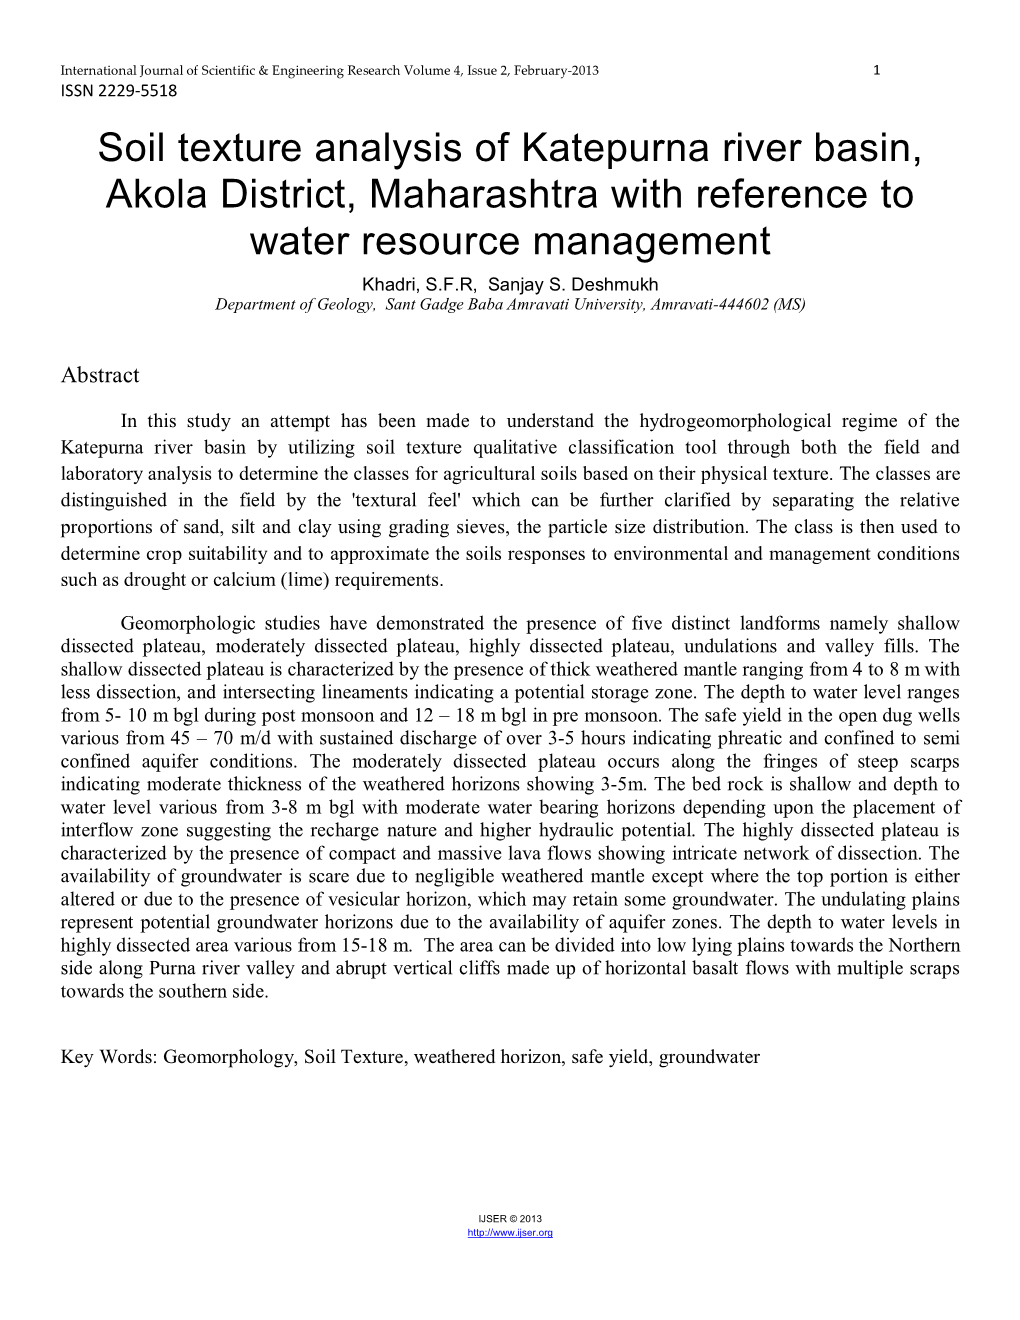 Soil Texture Analysis of Katepurna River Basin, Akola District, Maharashtra with Reference to Water Resource Management Khadri, S.F.R, Sanjay S